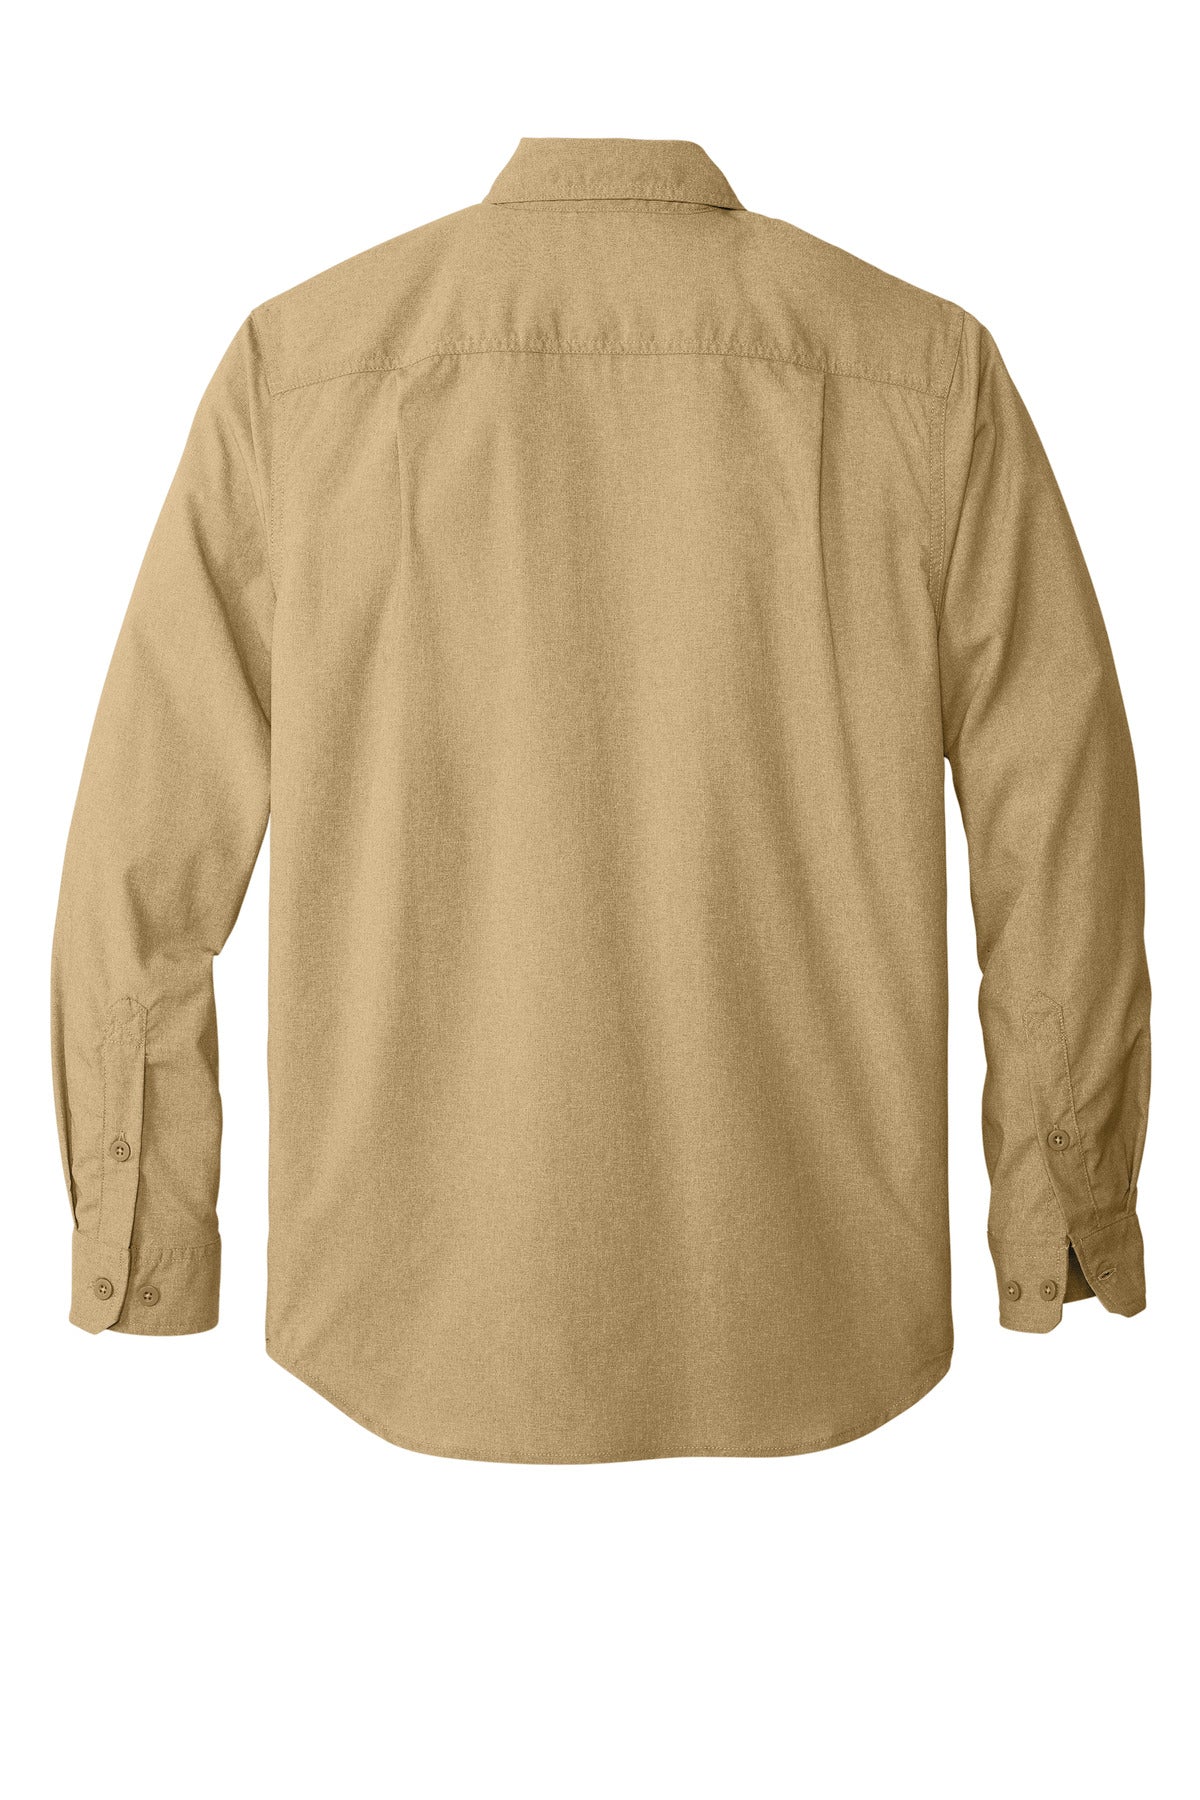 Carhartt Force Solid Long Sleeve Shirt CT105291